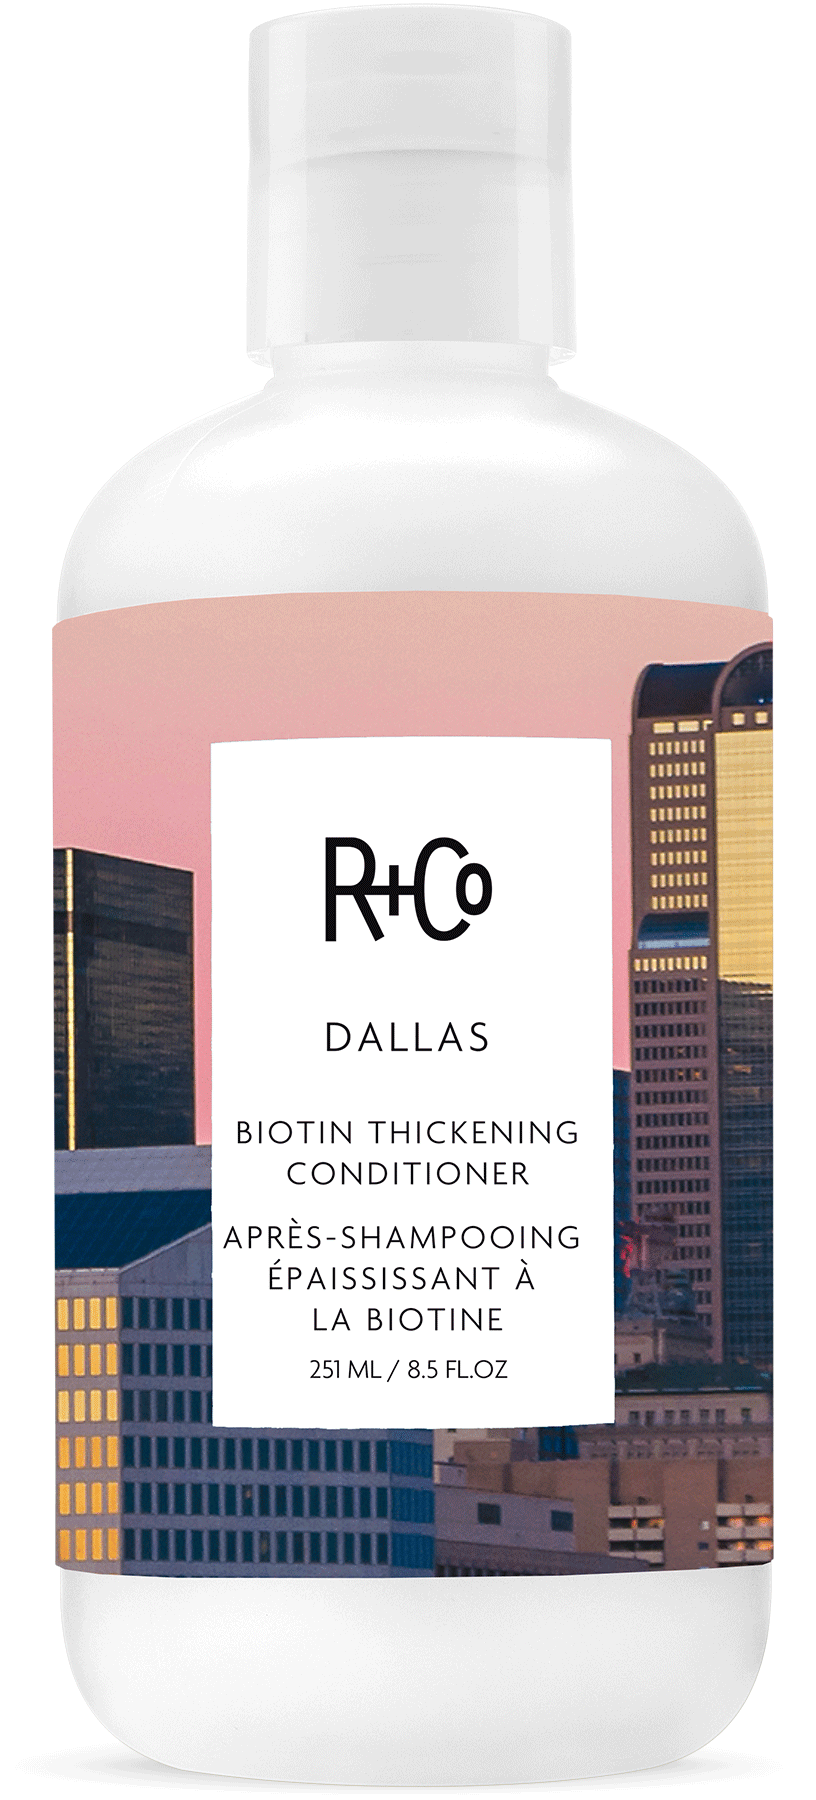 R+CO-Dallas - Biotin Thickening Conditioner